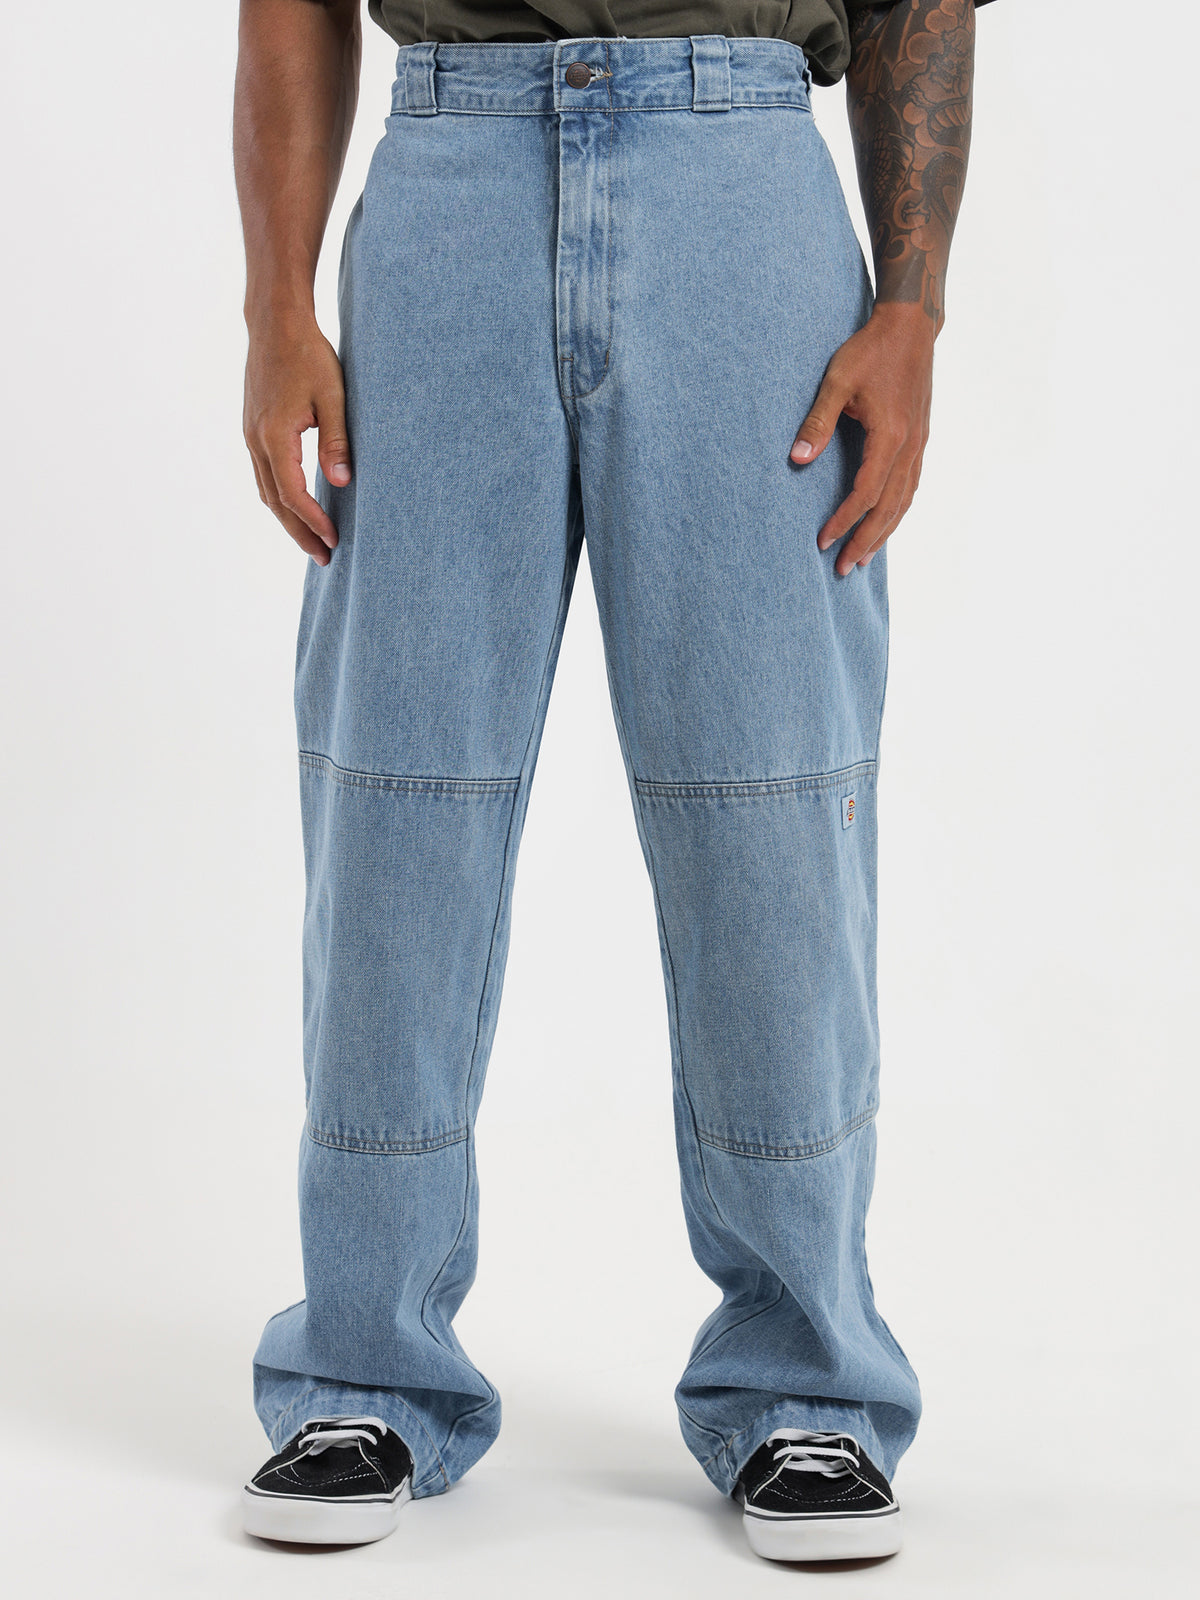 85-283AU Double Knee Jeans in Light Blue